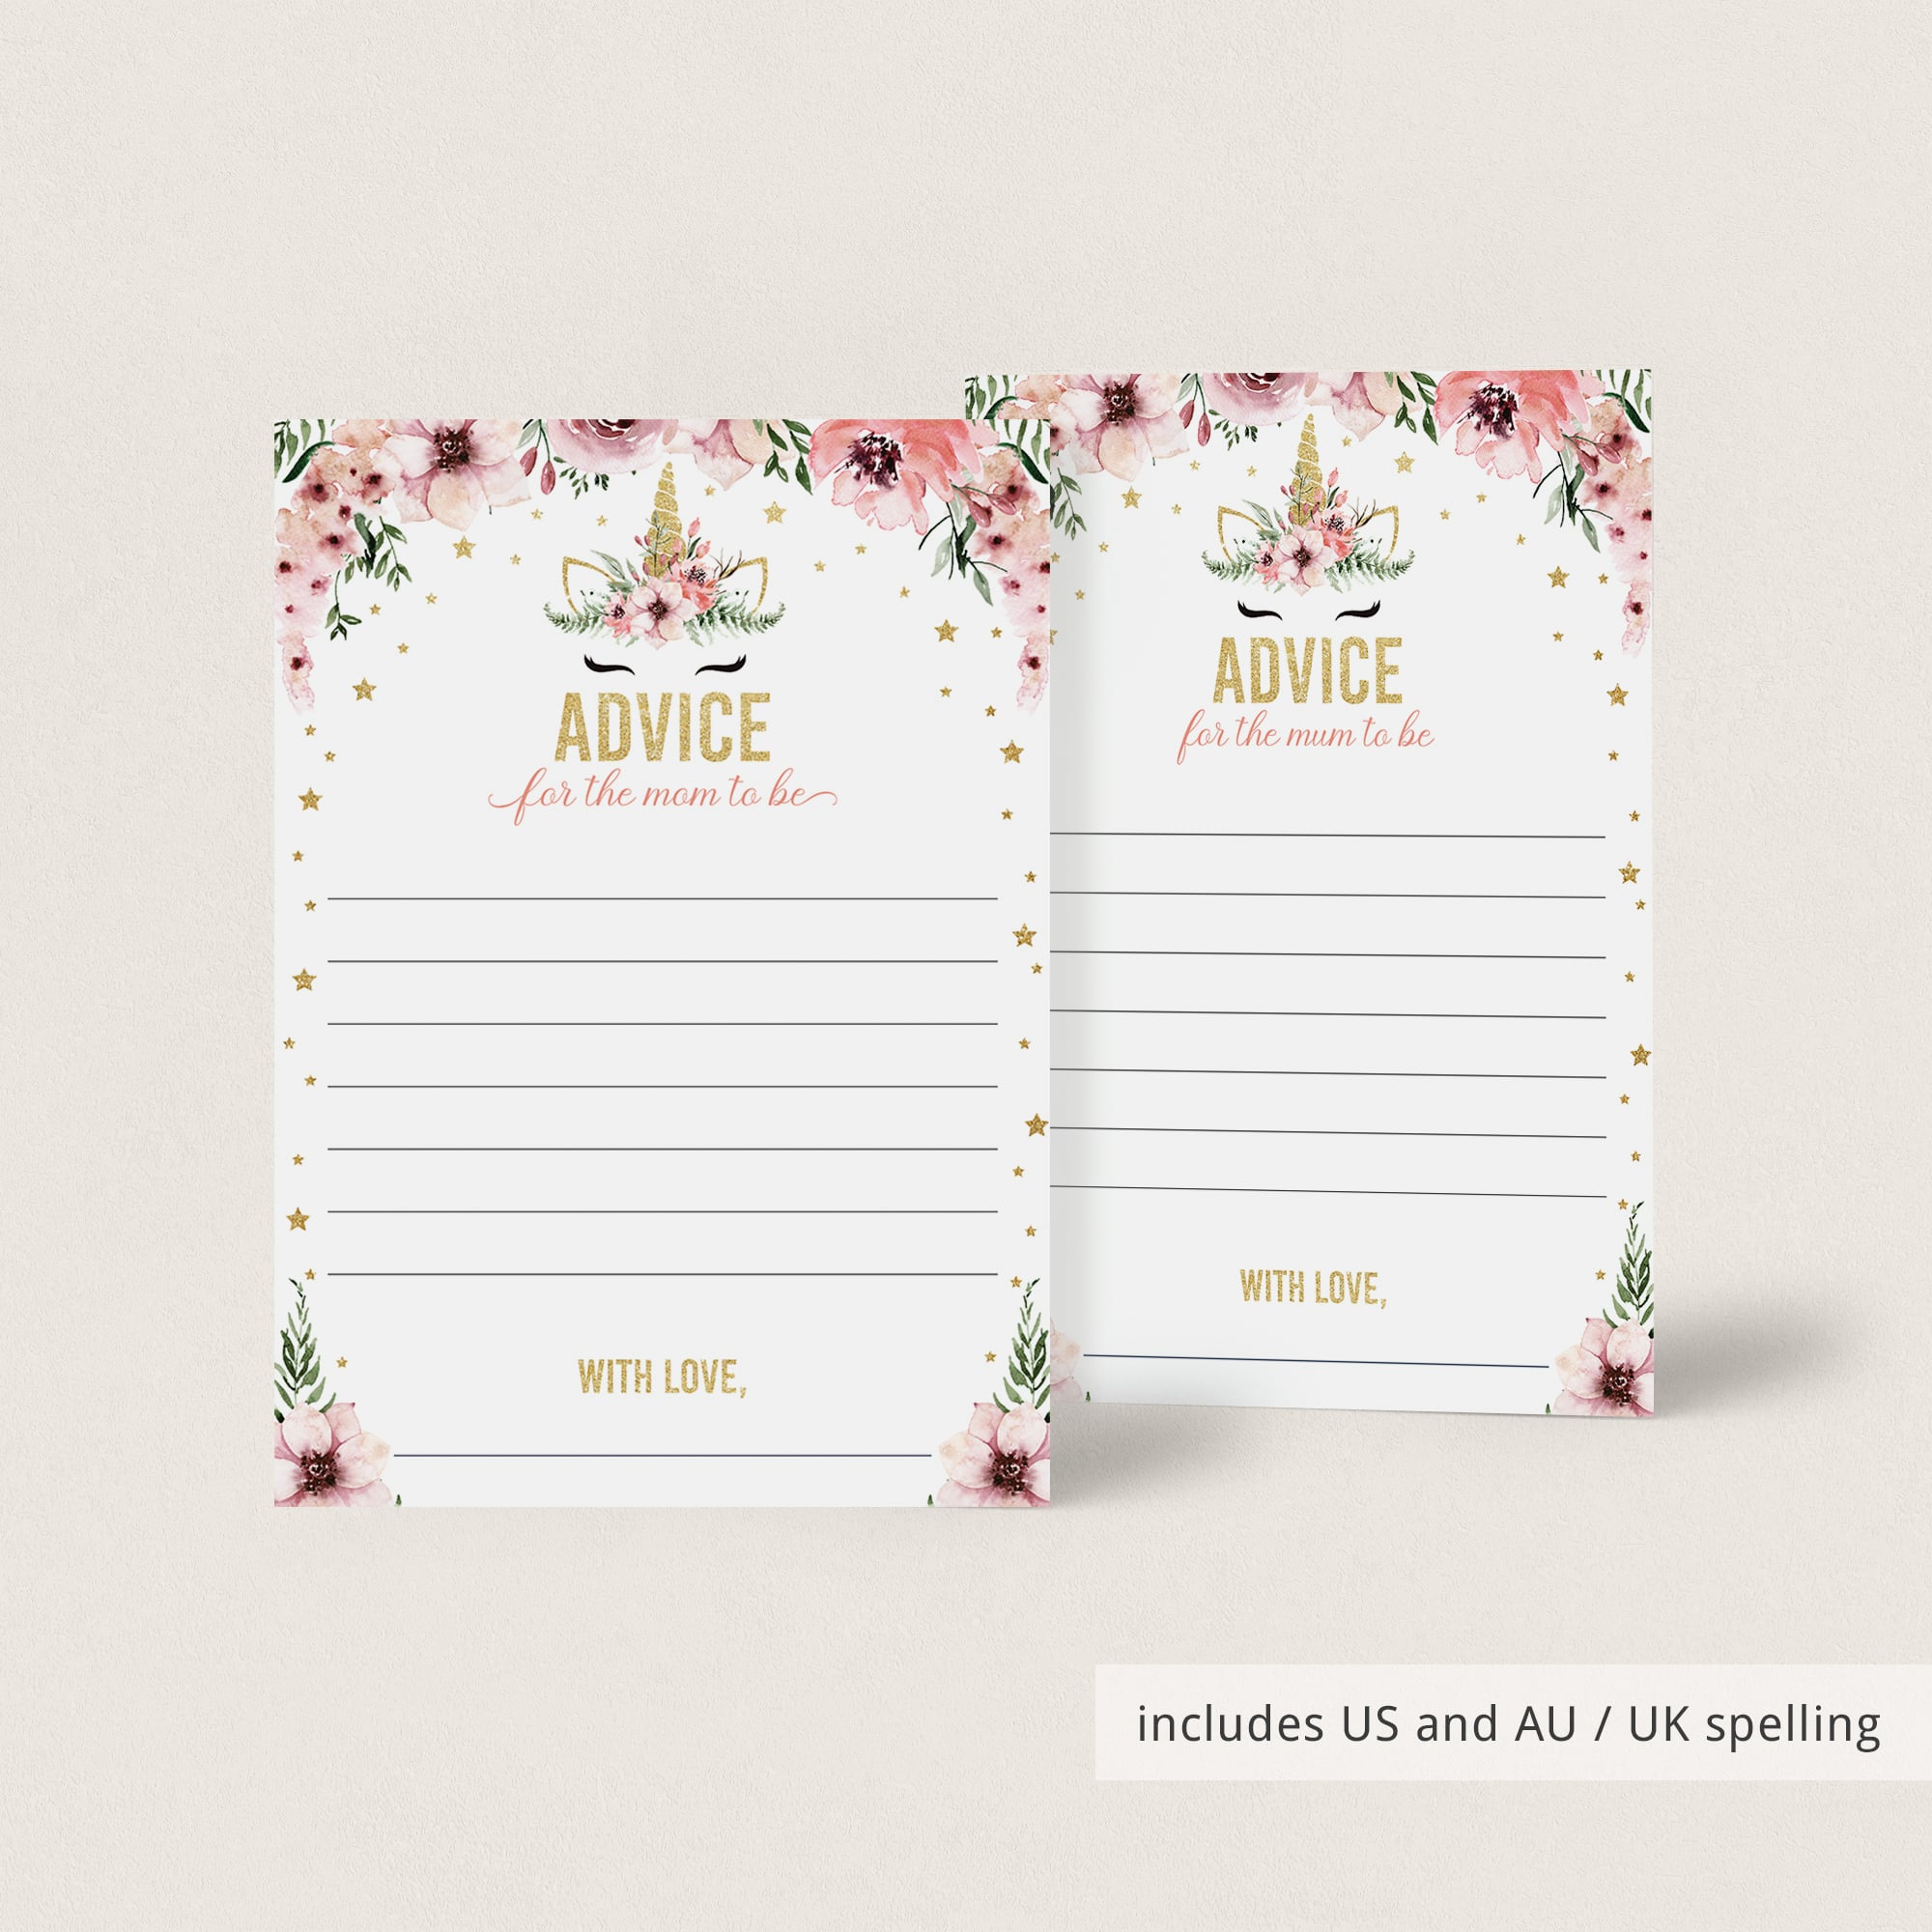 Girl baby shower advice cards printable unicorn theme by LittleSizzle